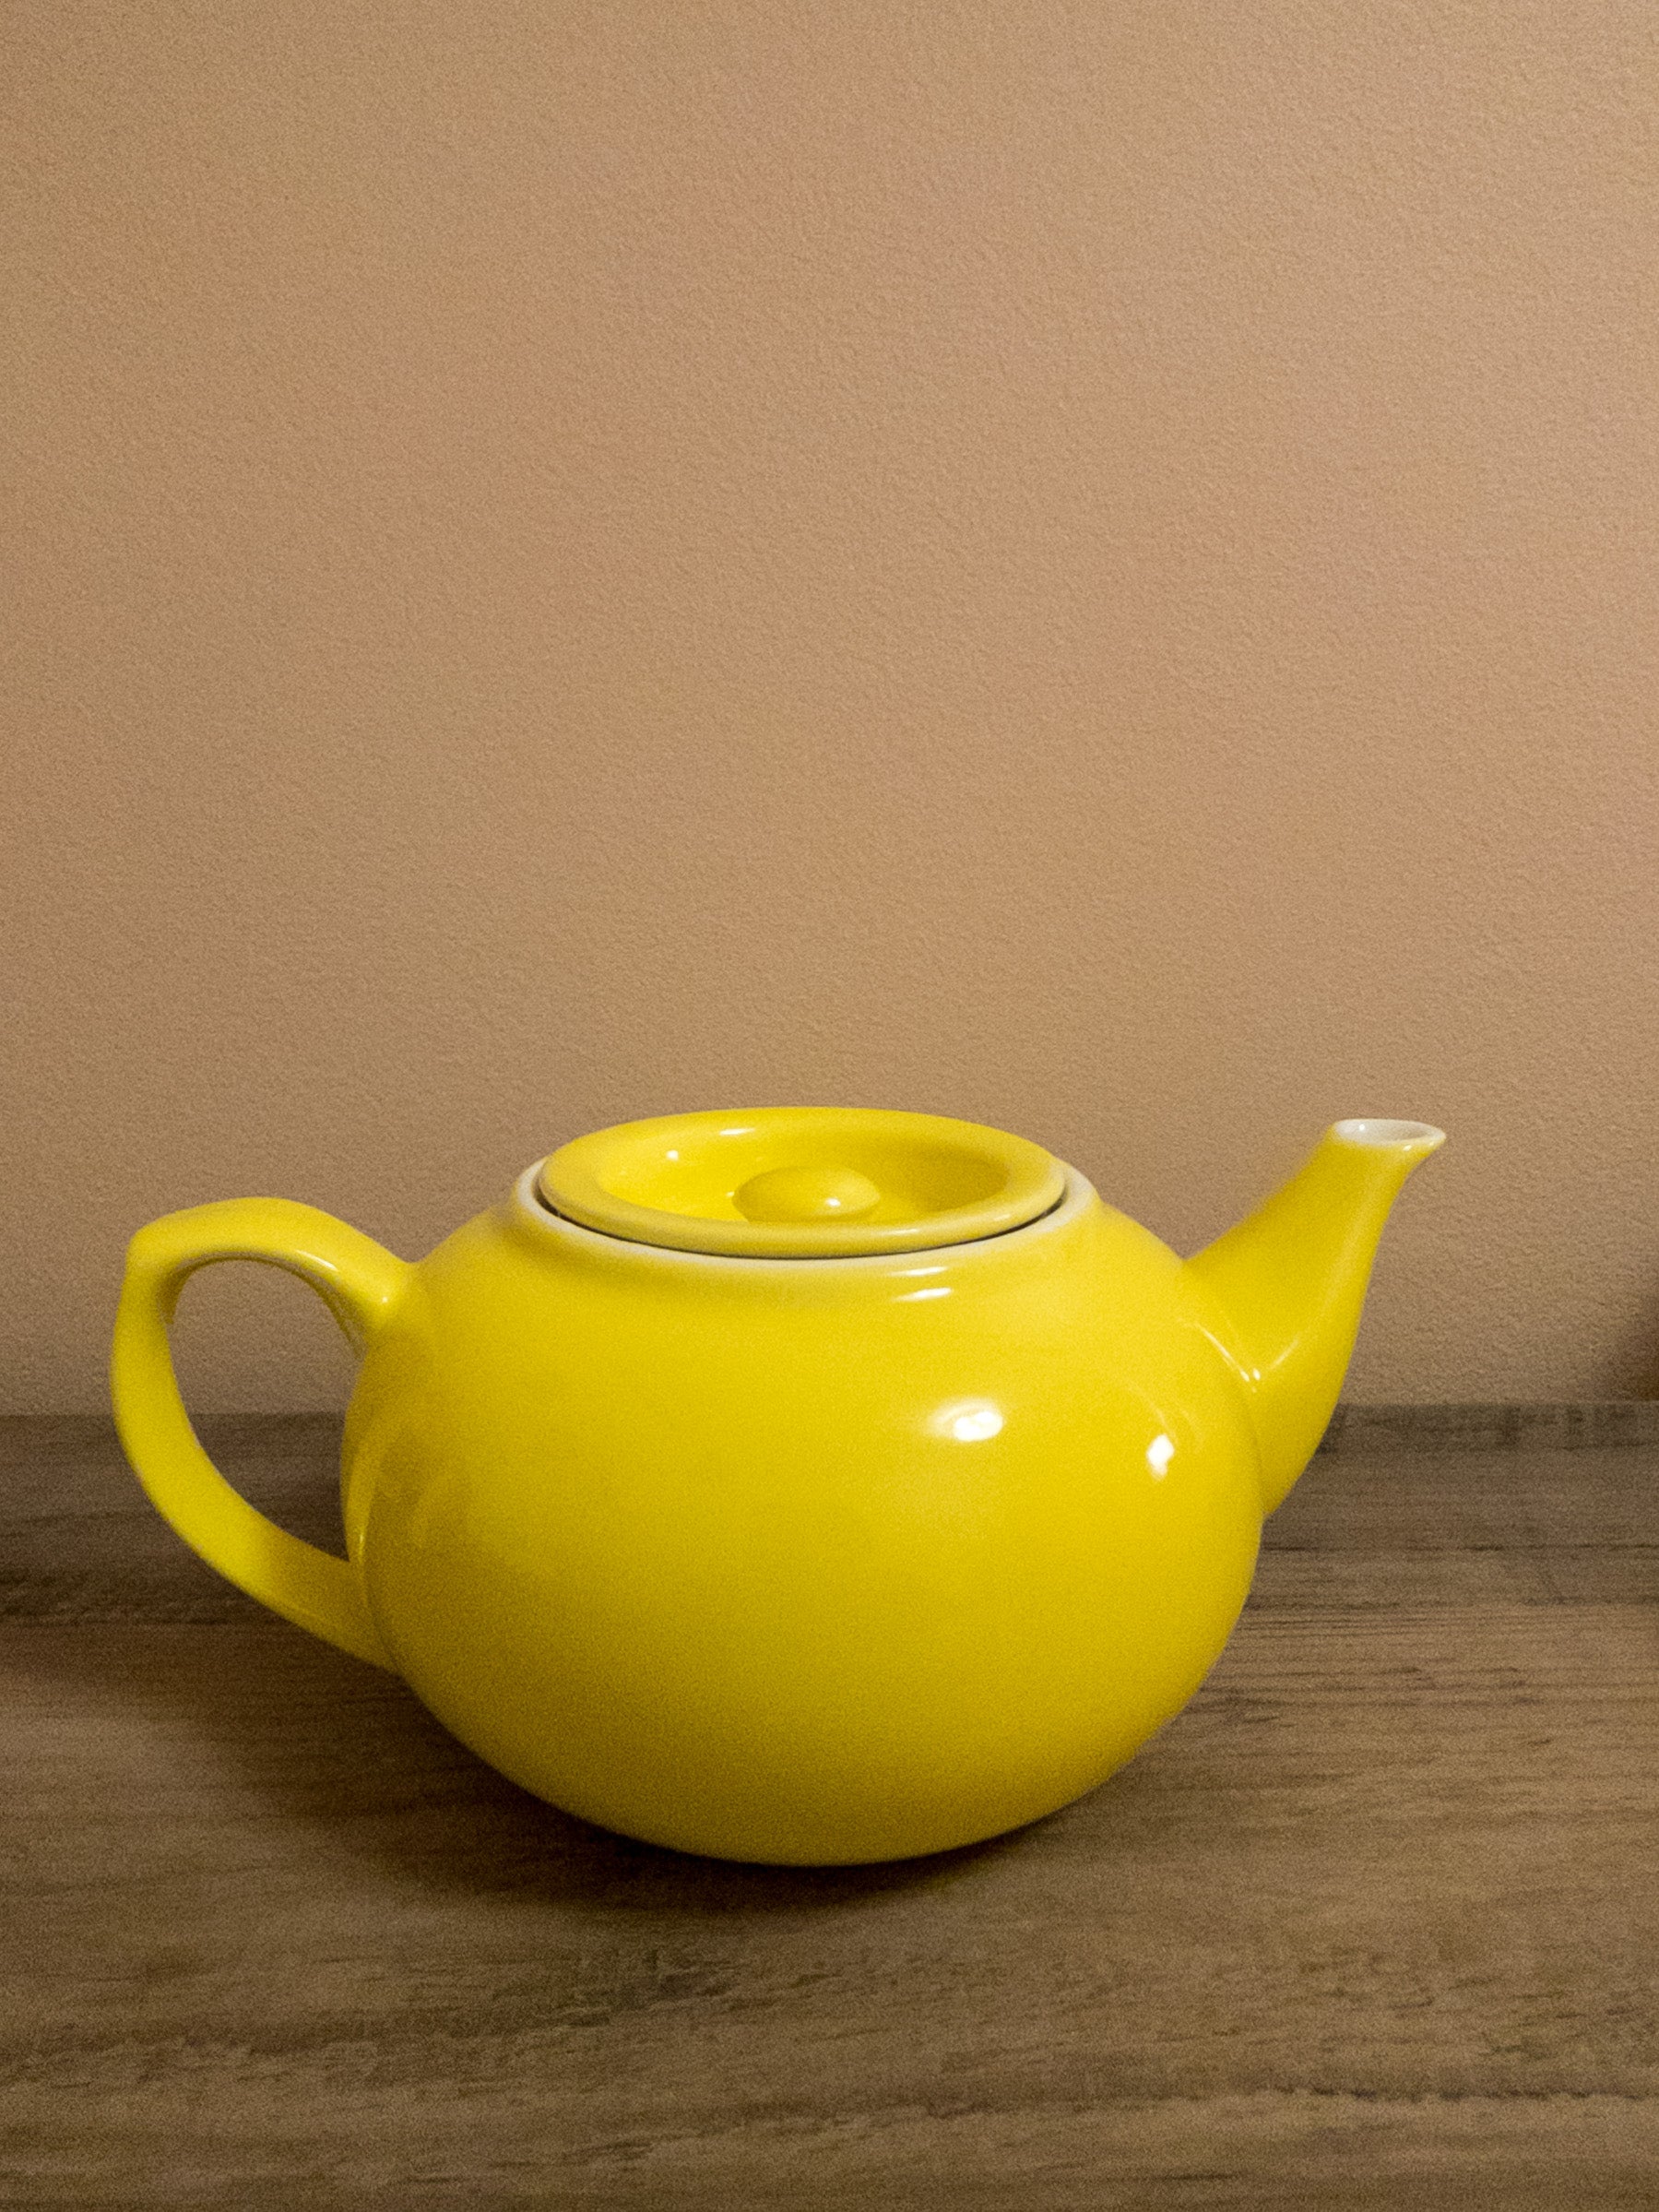 Yellow ceramic teapot.